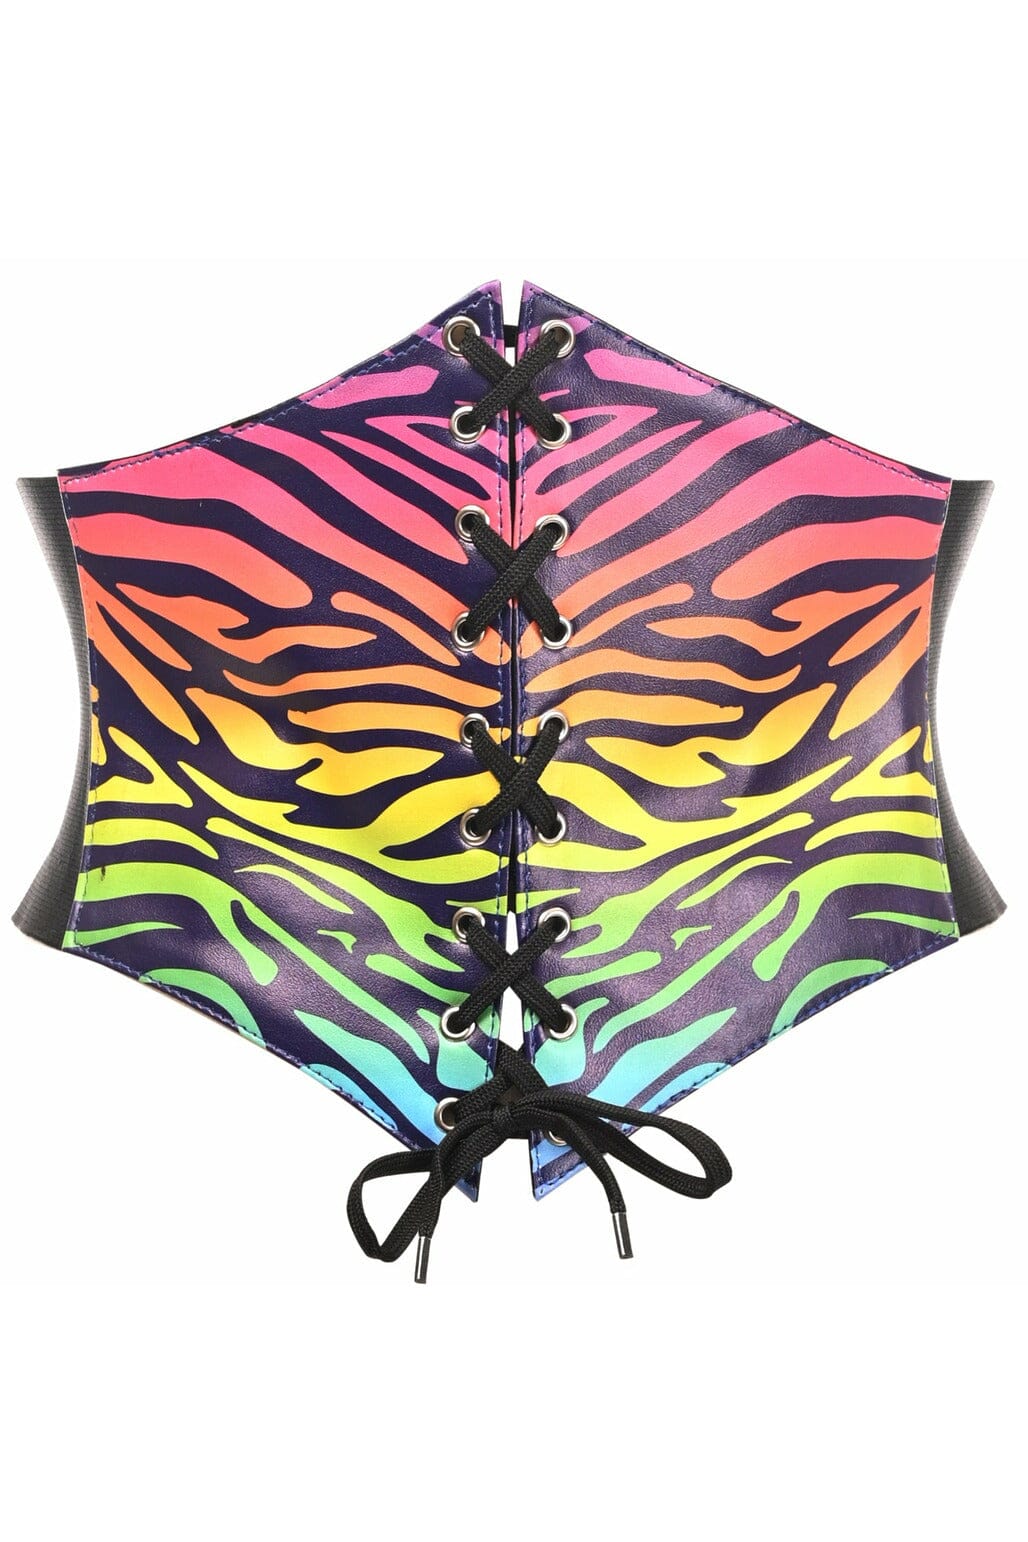 Lavish Rainbow Animal Print Lace-Up Corset Belt Cincher-Corset Belts-Daisy Corsets-Rainbow-S-SEXYSHOES.COM